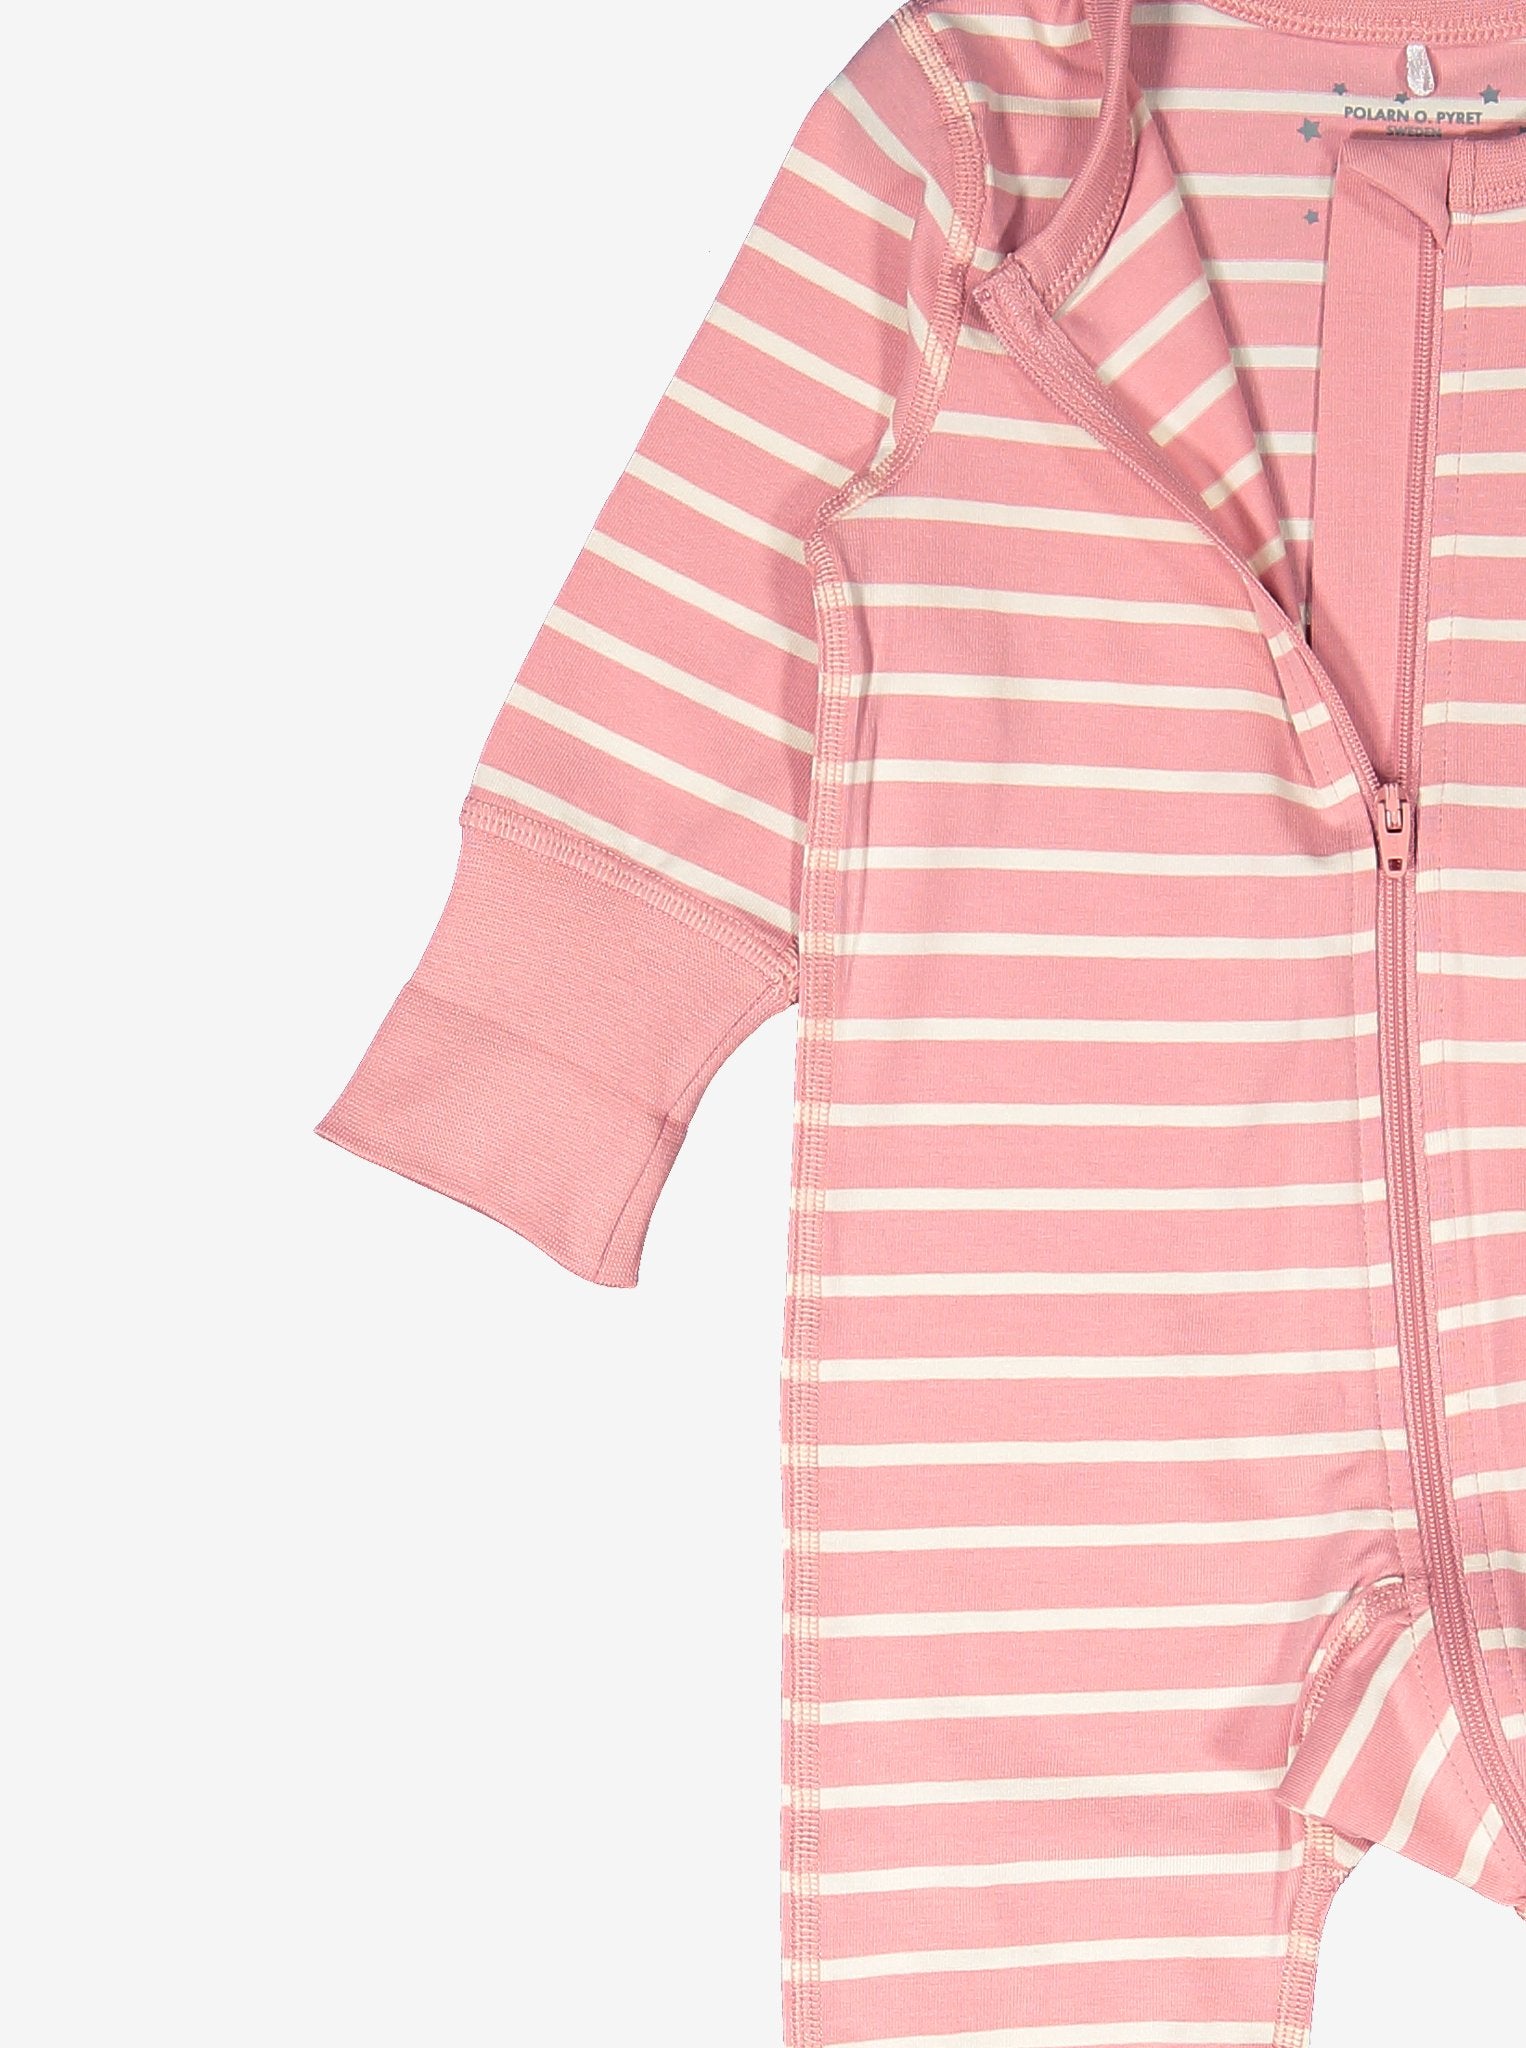 PO.P Stripe Sleepsuit